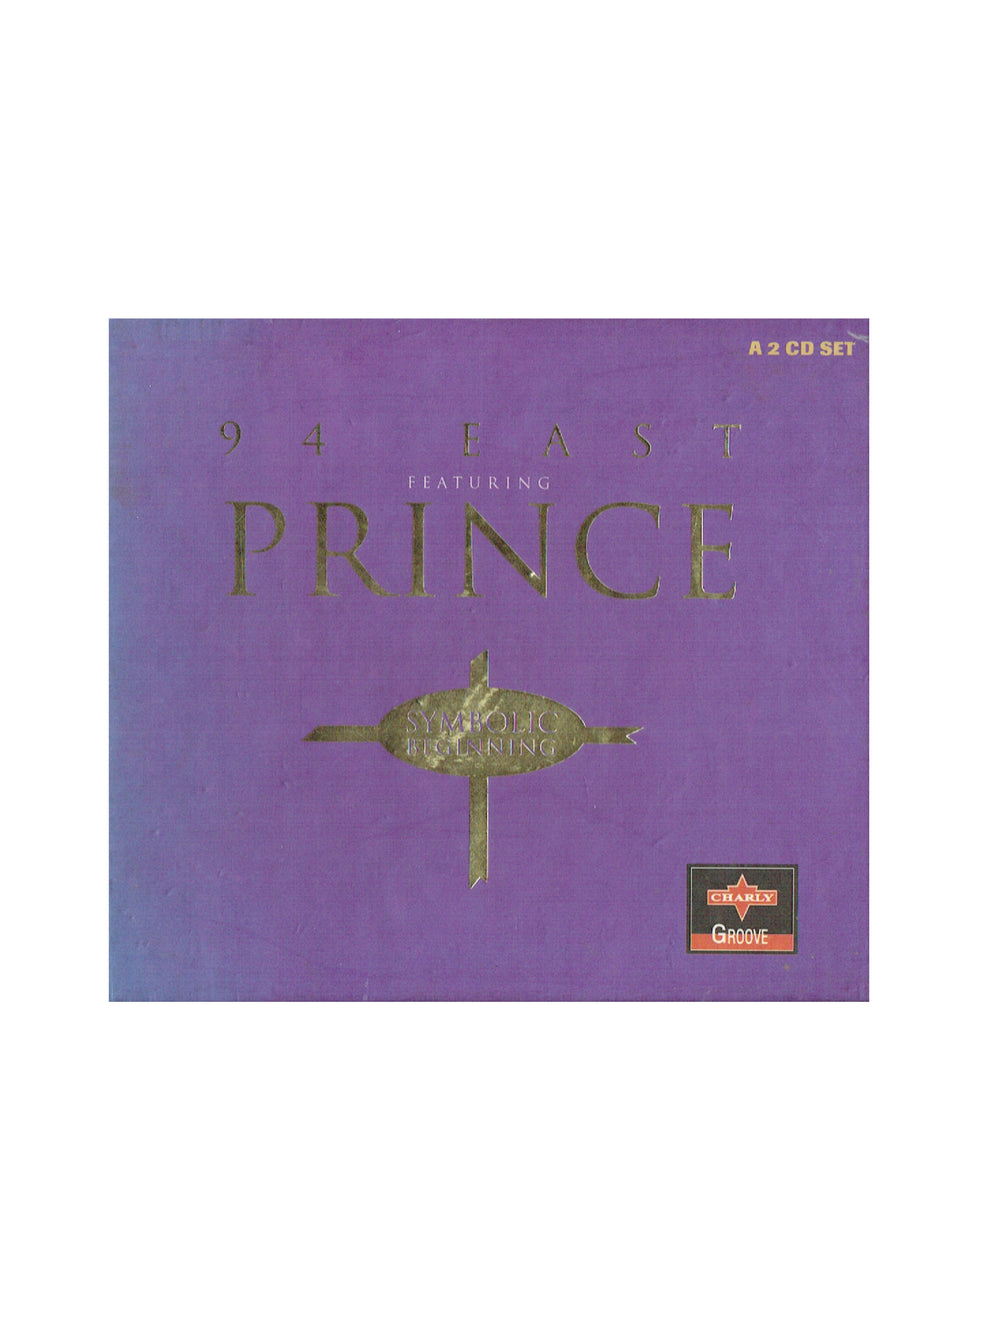 Prince – 94 East Featuring Prince Symbolic Beginning 2 CD Album Box Set Preloved: 1995